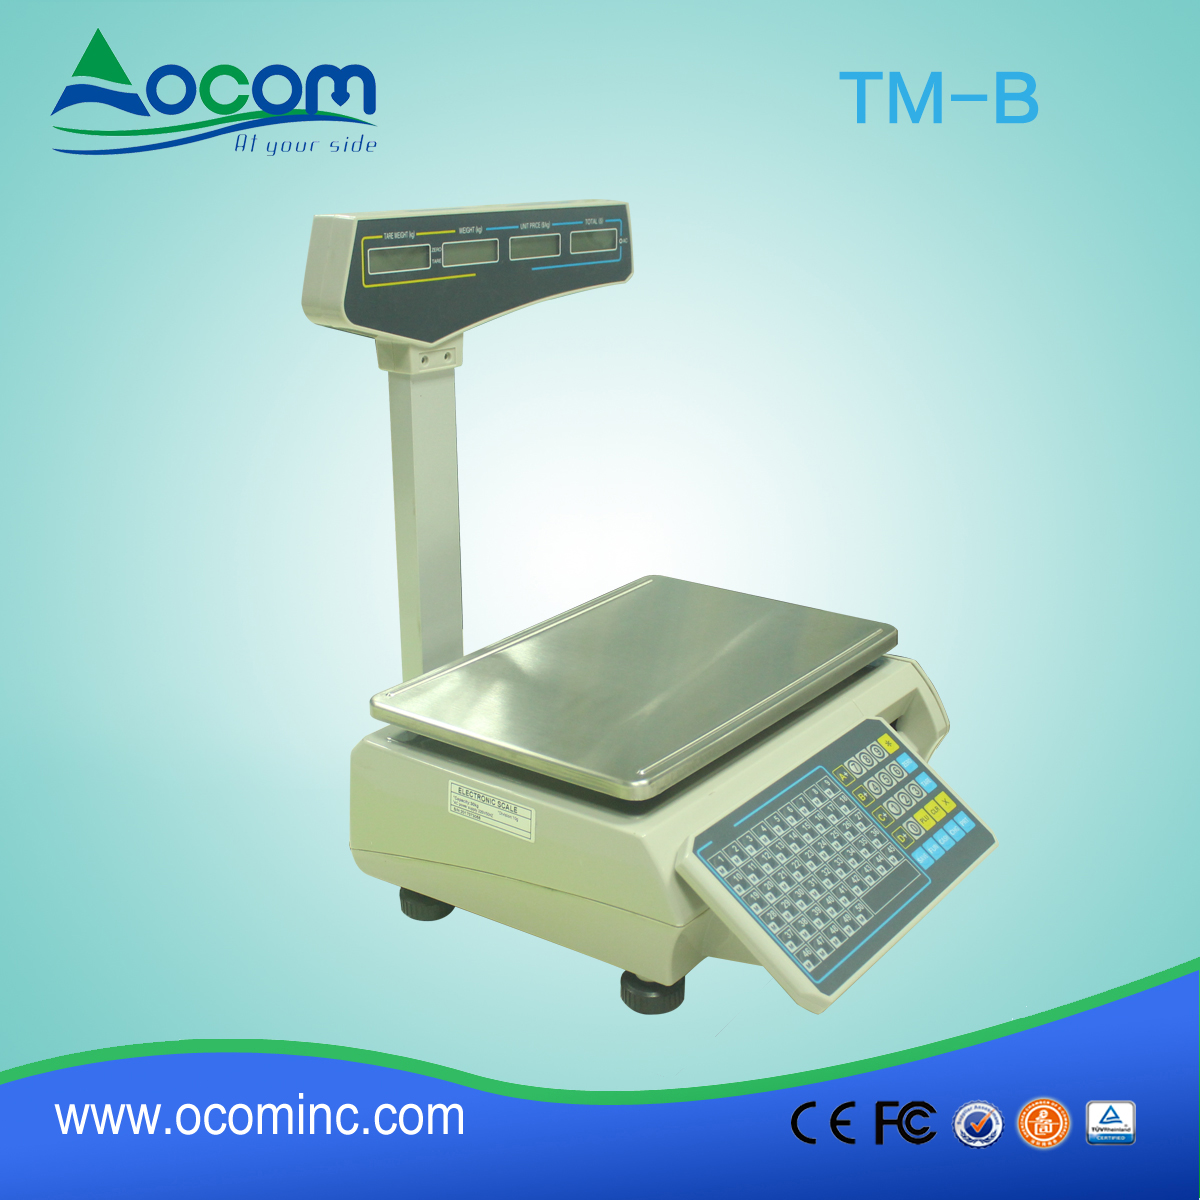 (tm-b) 低成本热敏印刷条码电子秤